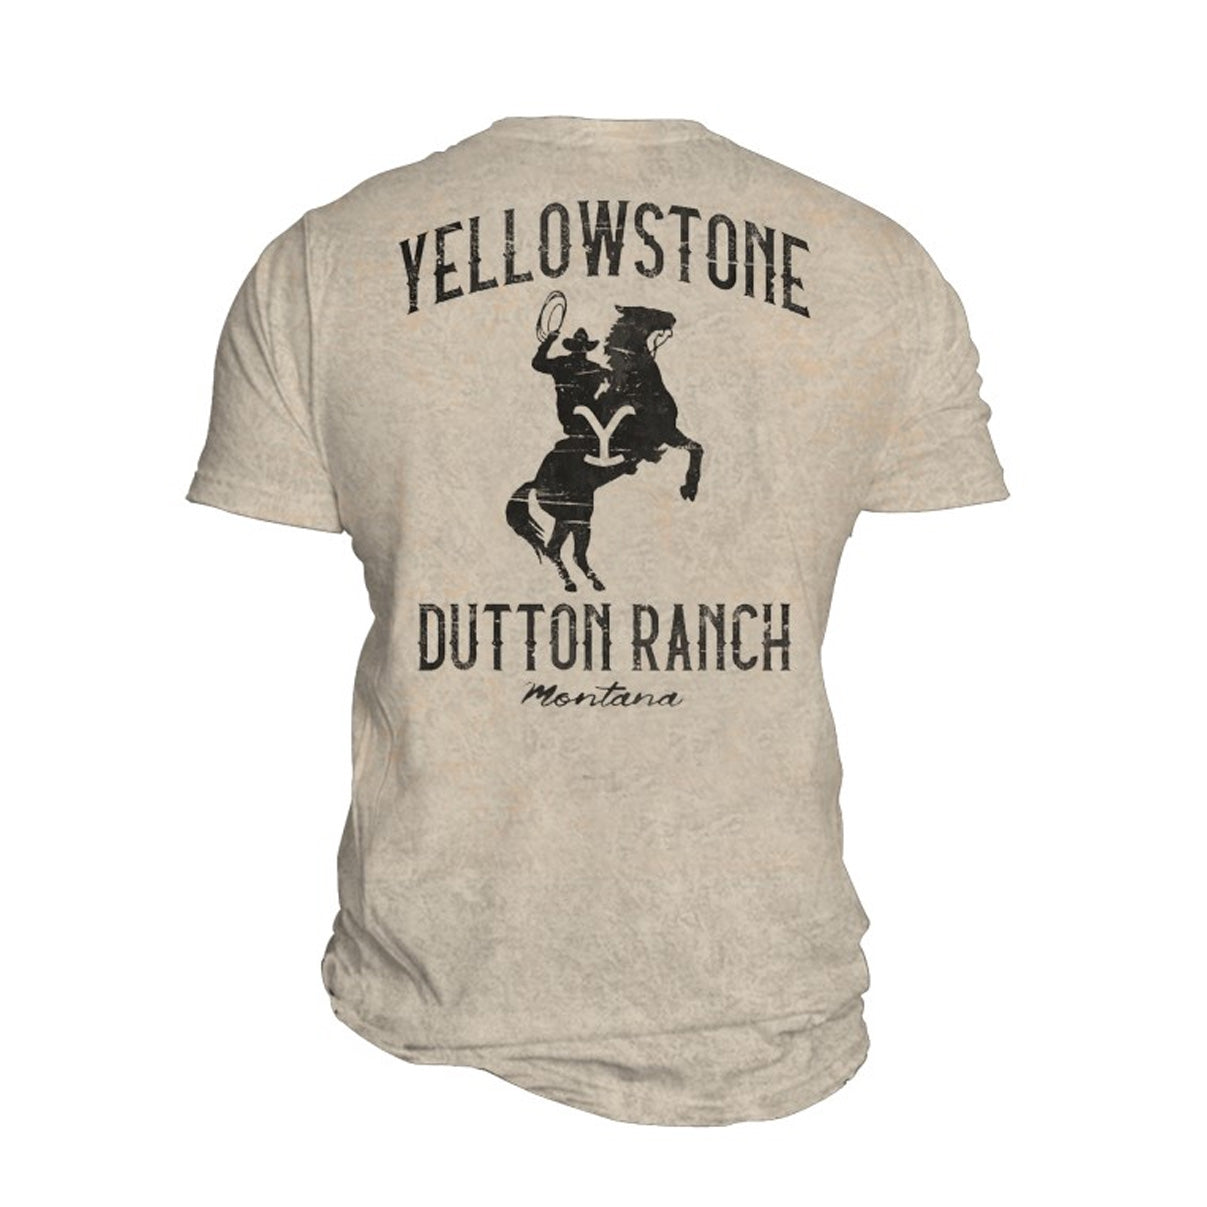 Changes Yellowstone Dutton Ranch Shirt 66-331-231